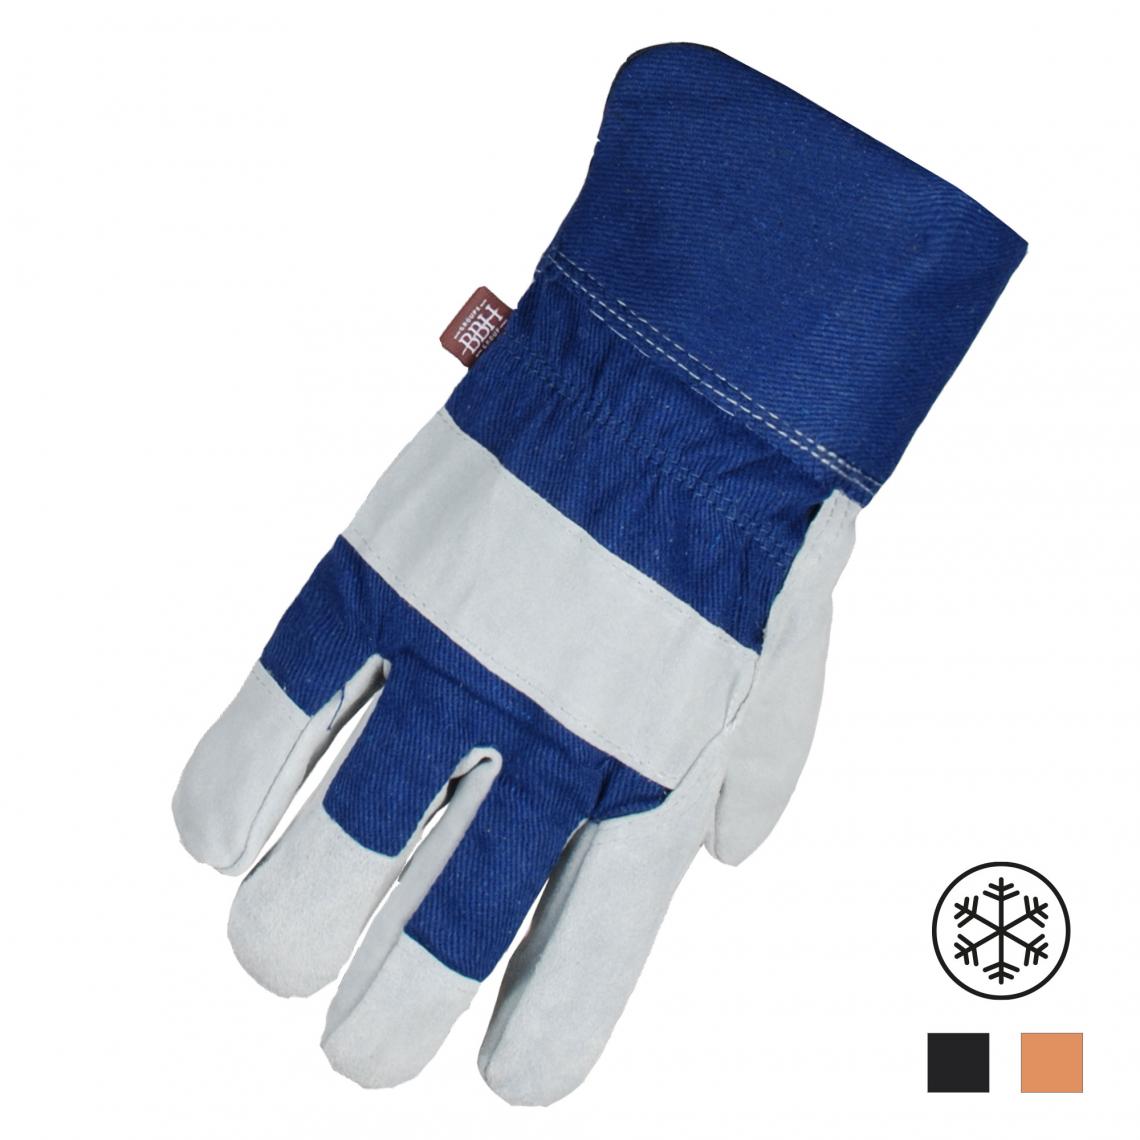 Horizon Pile Lined Work Gloves